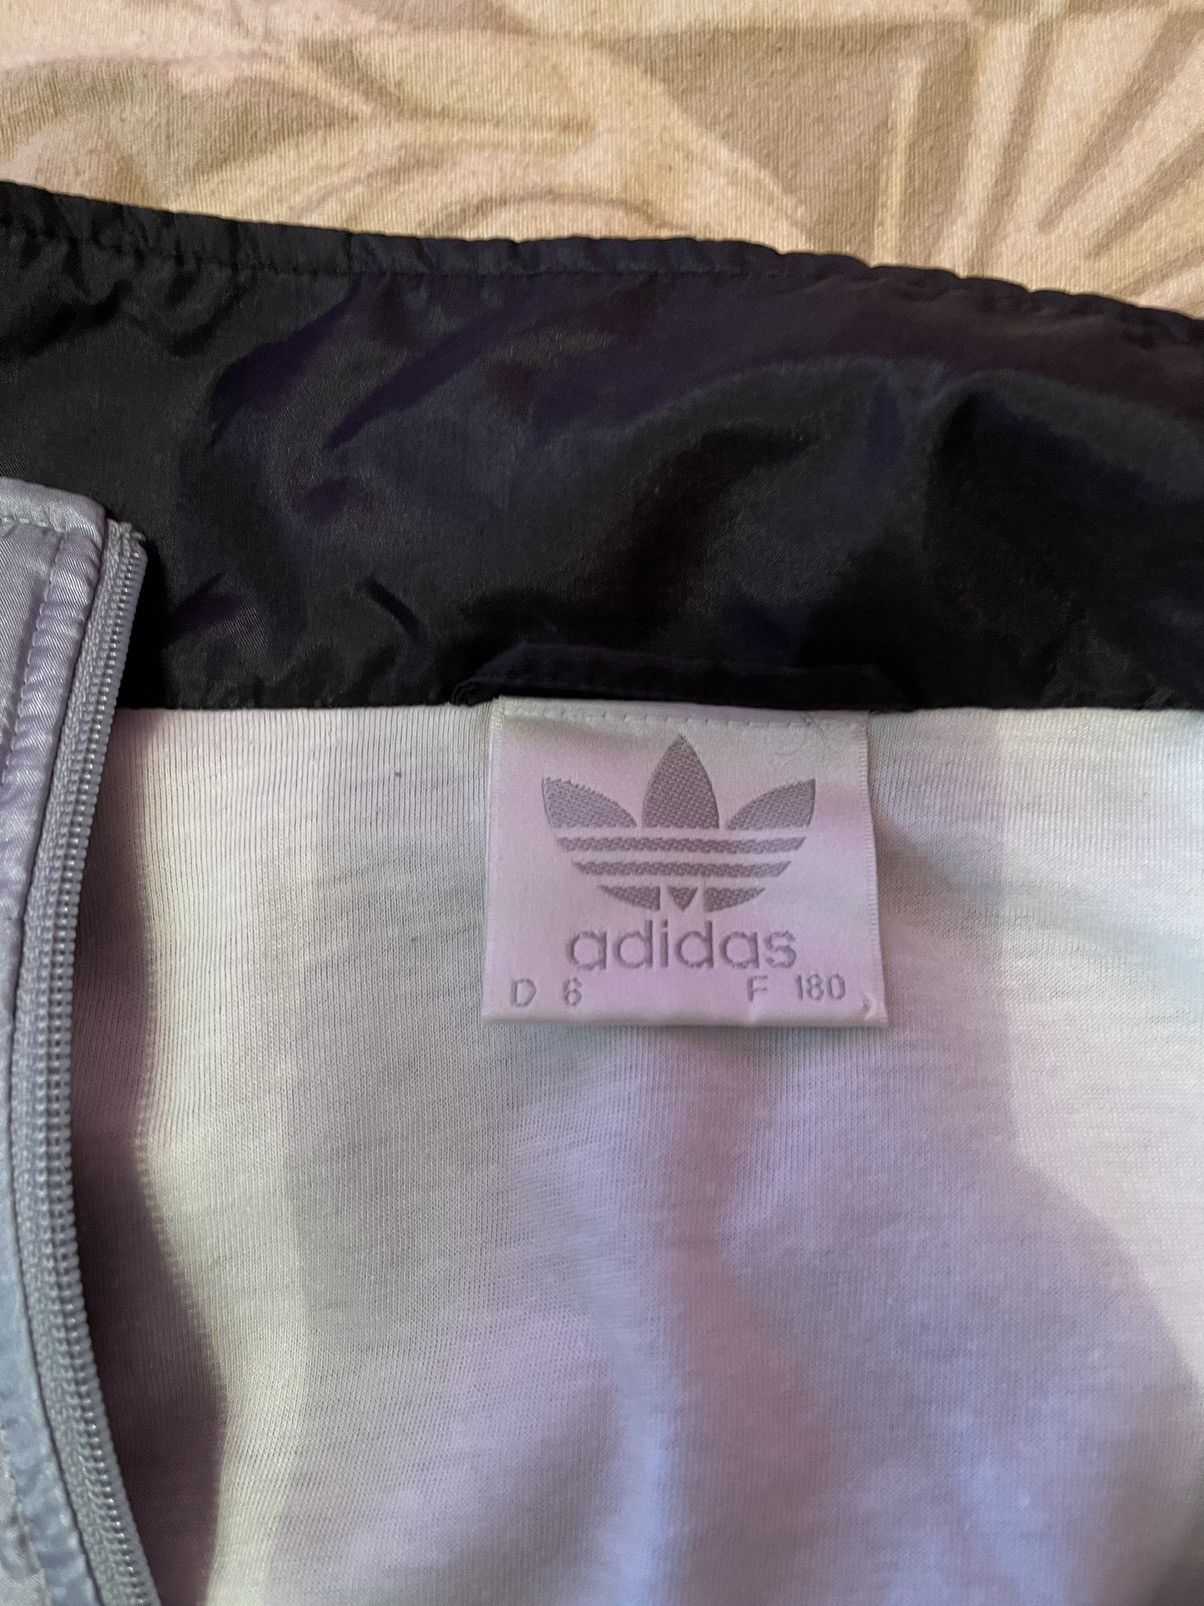 Adidas Adidas zip hoodie vintage Size US M / EU 48-50 / 2 - 2 Preview